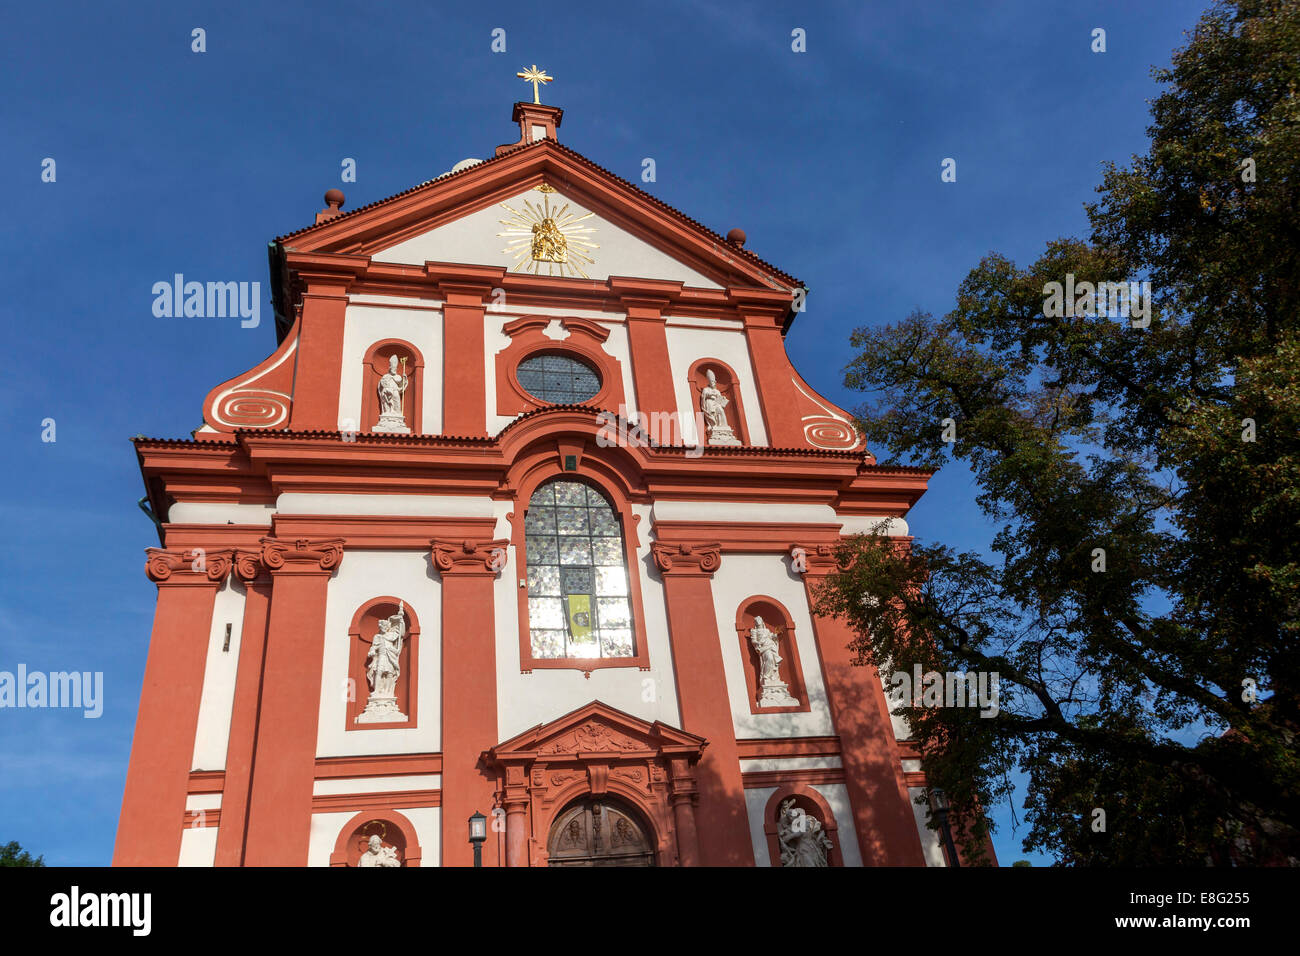 Church of the Assumption, Brandys nad Labem - Stara Boleslav Stock Photo